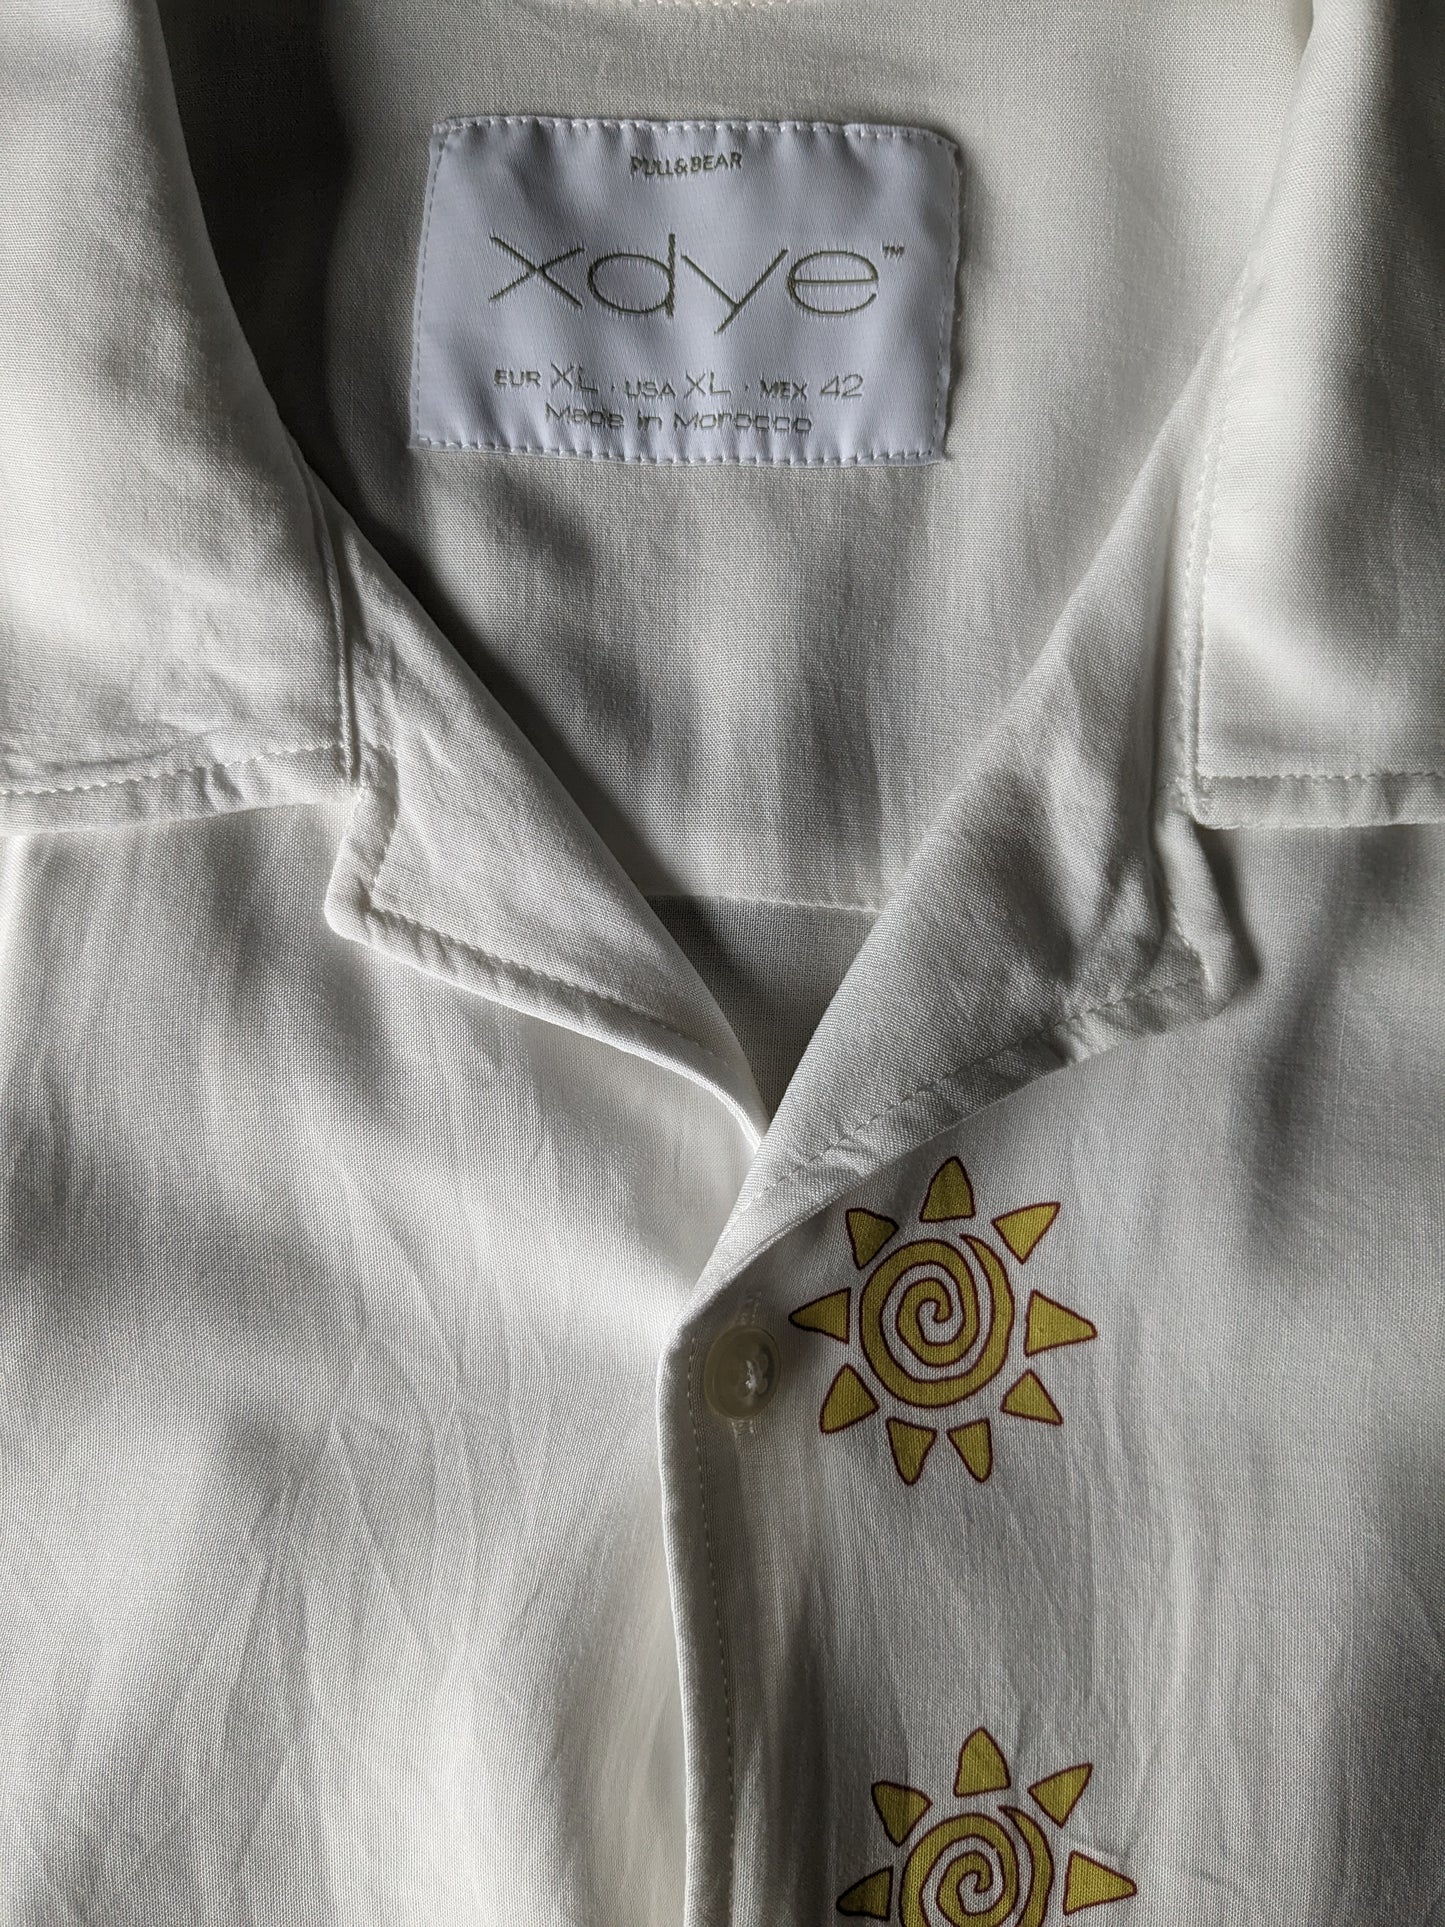 Xdye shirt short sleeve. White with print / print. Size XL / XXL.